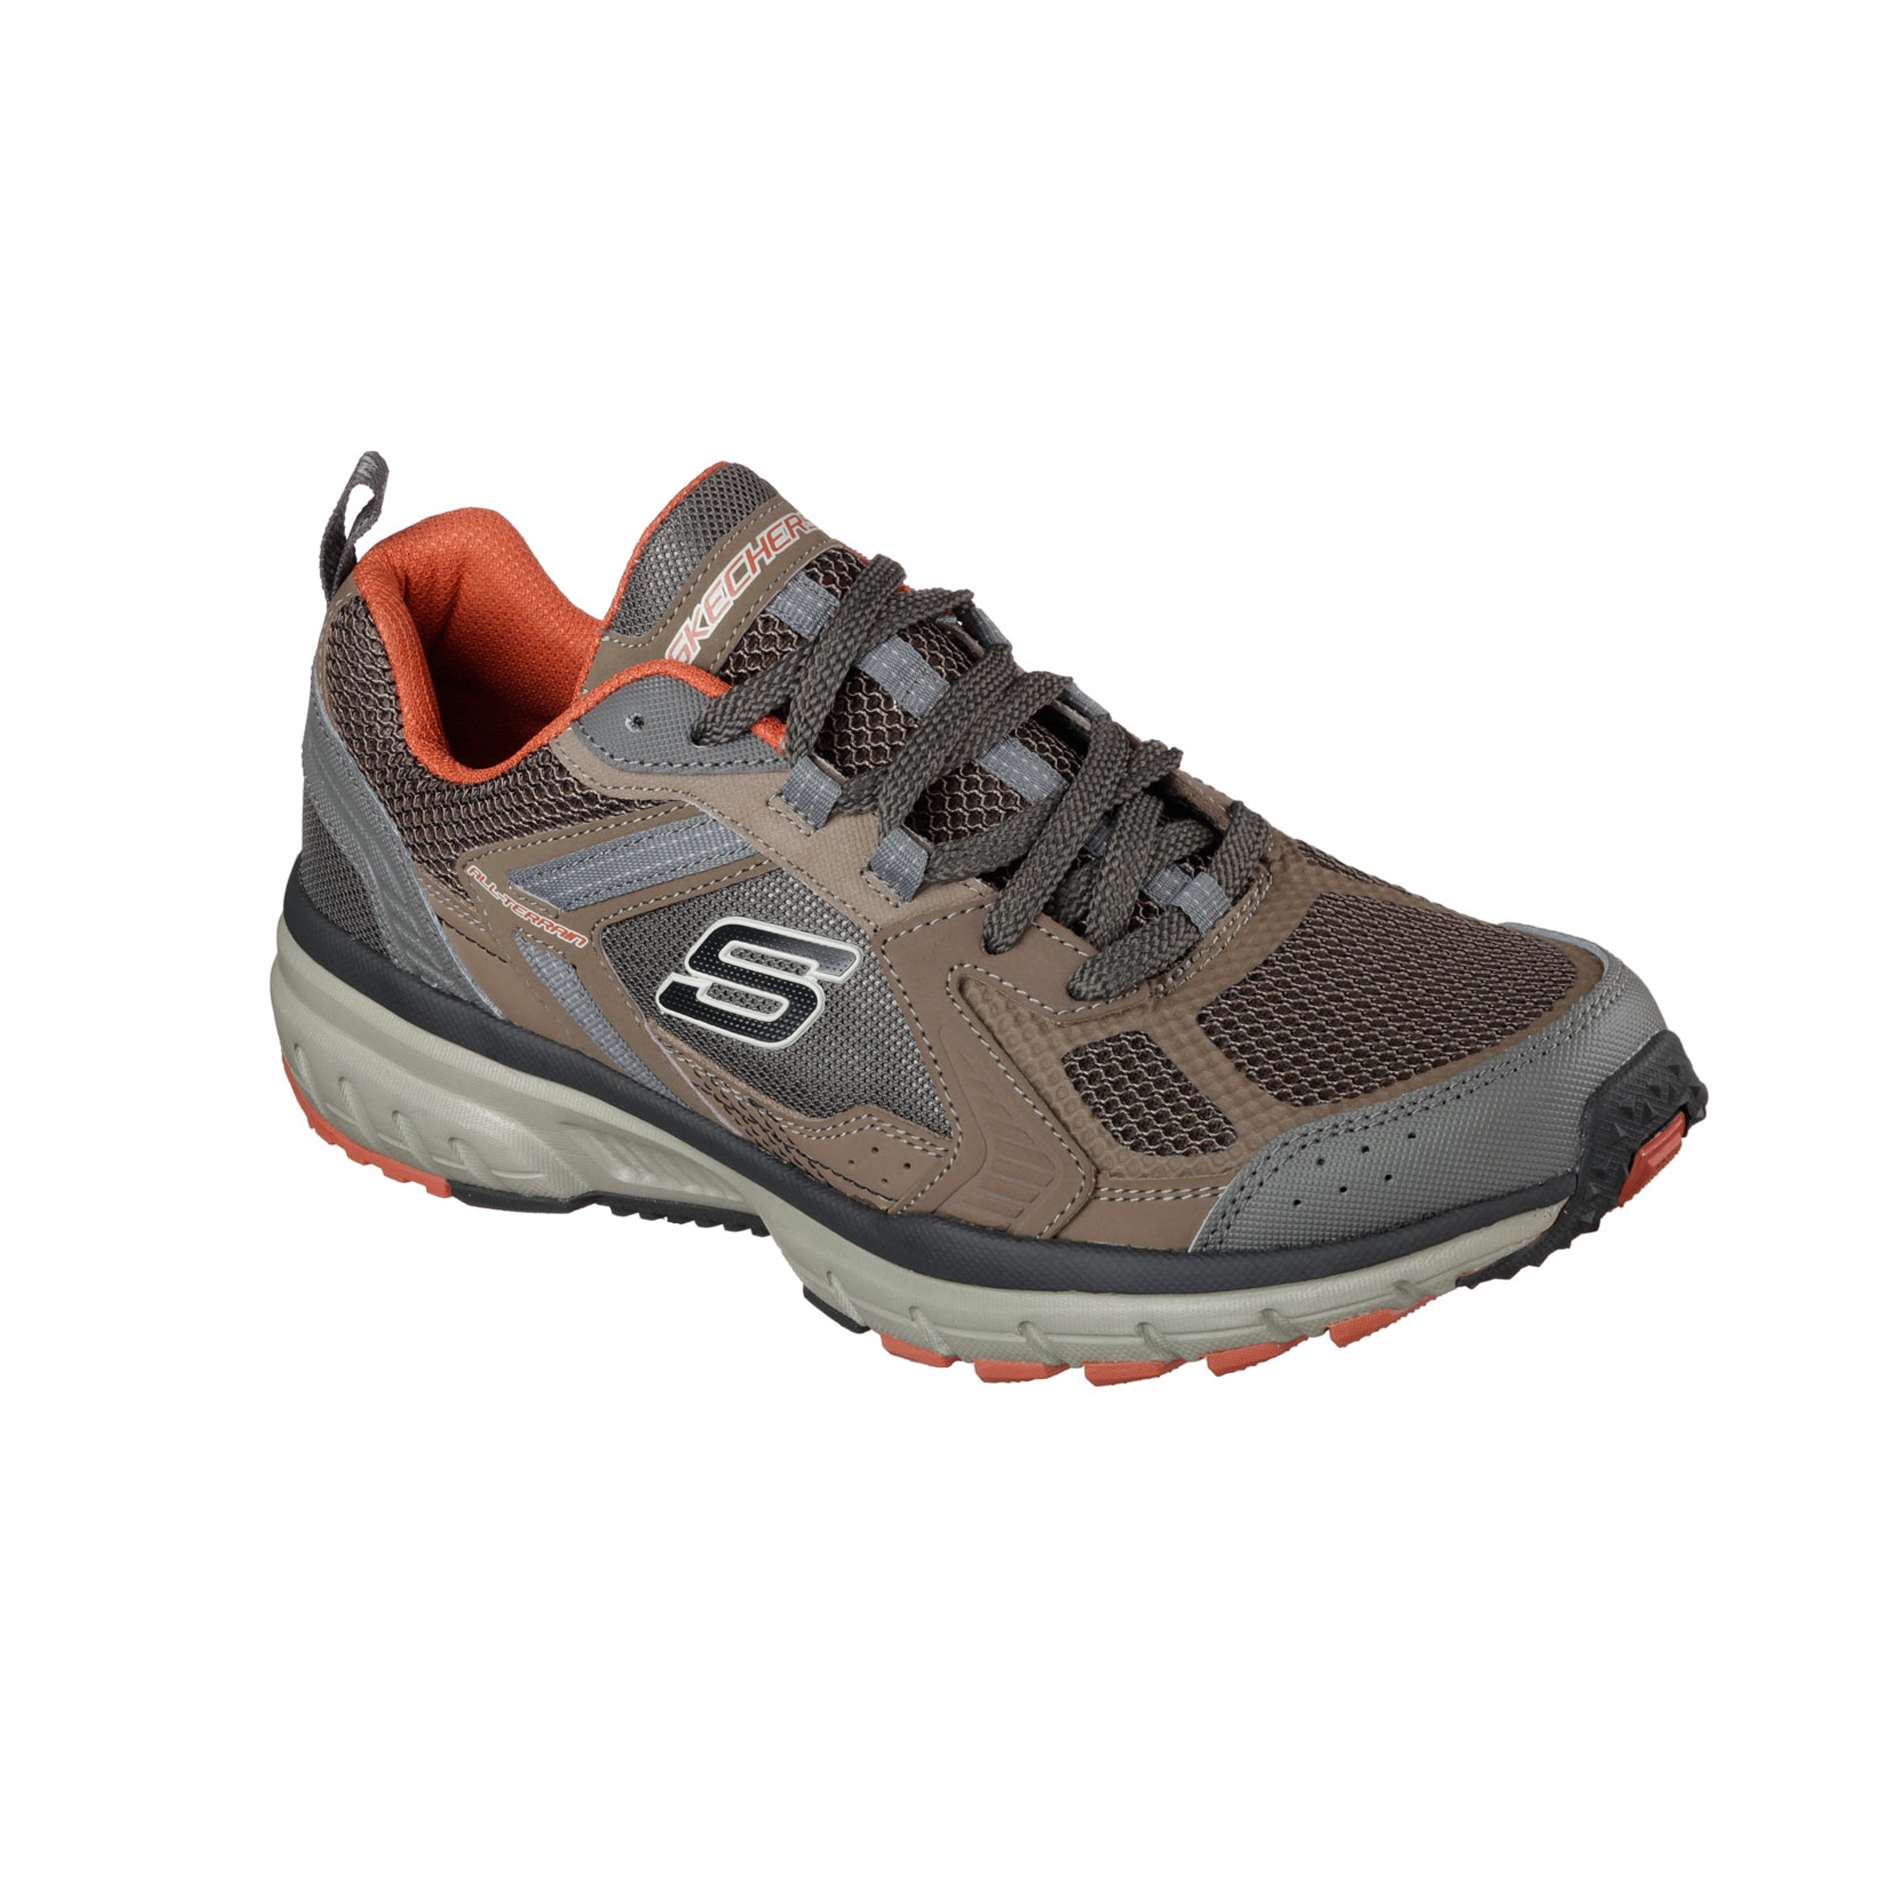 Skechers Men's Geo-Trek Pro Force Brown/Orange All-Terrain Running Shoe - Wide Width Available